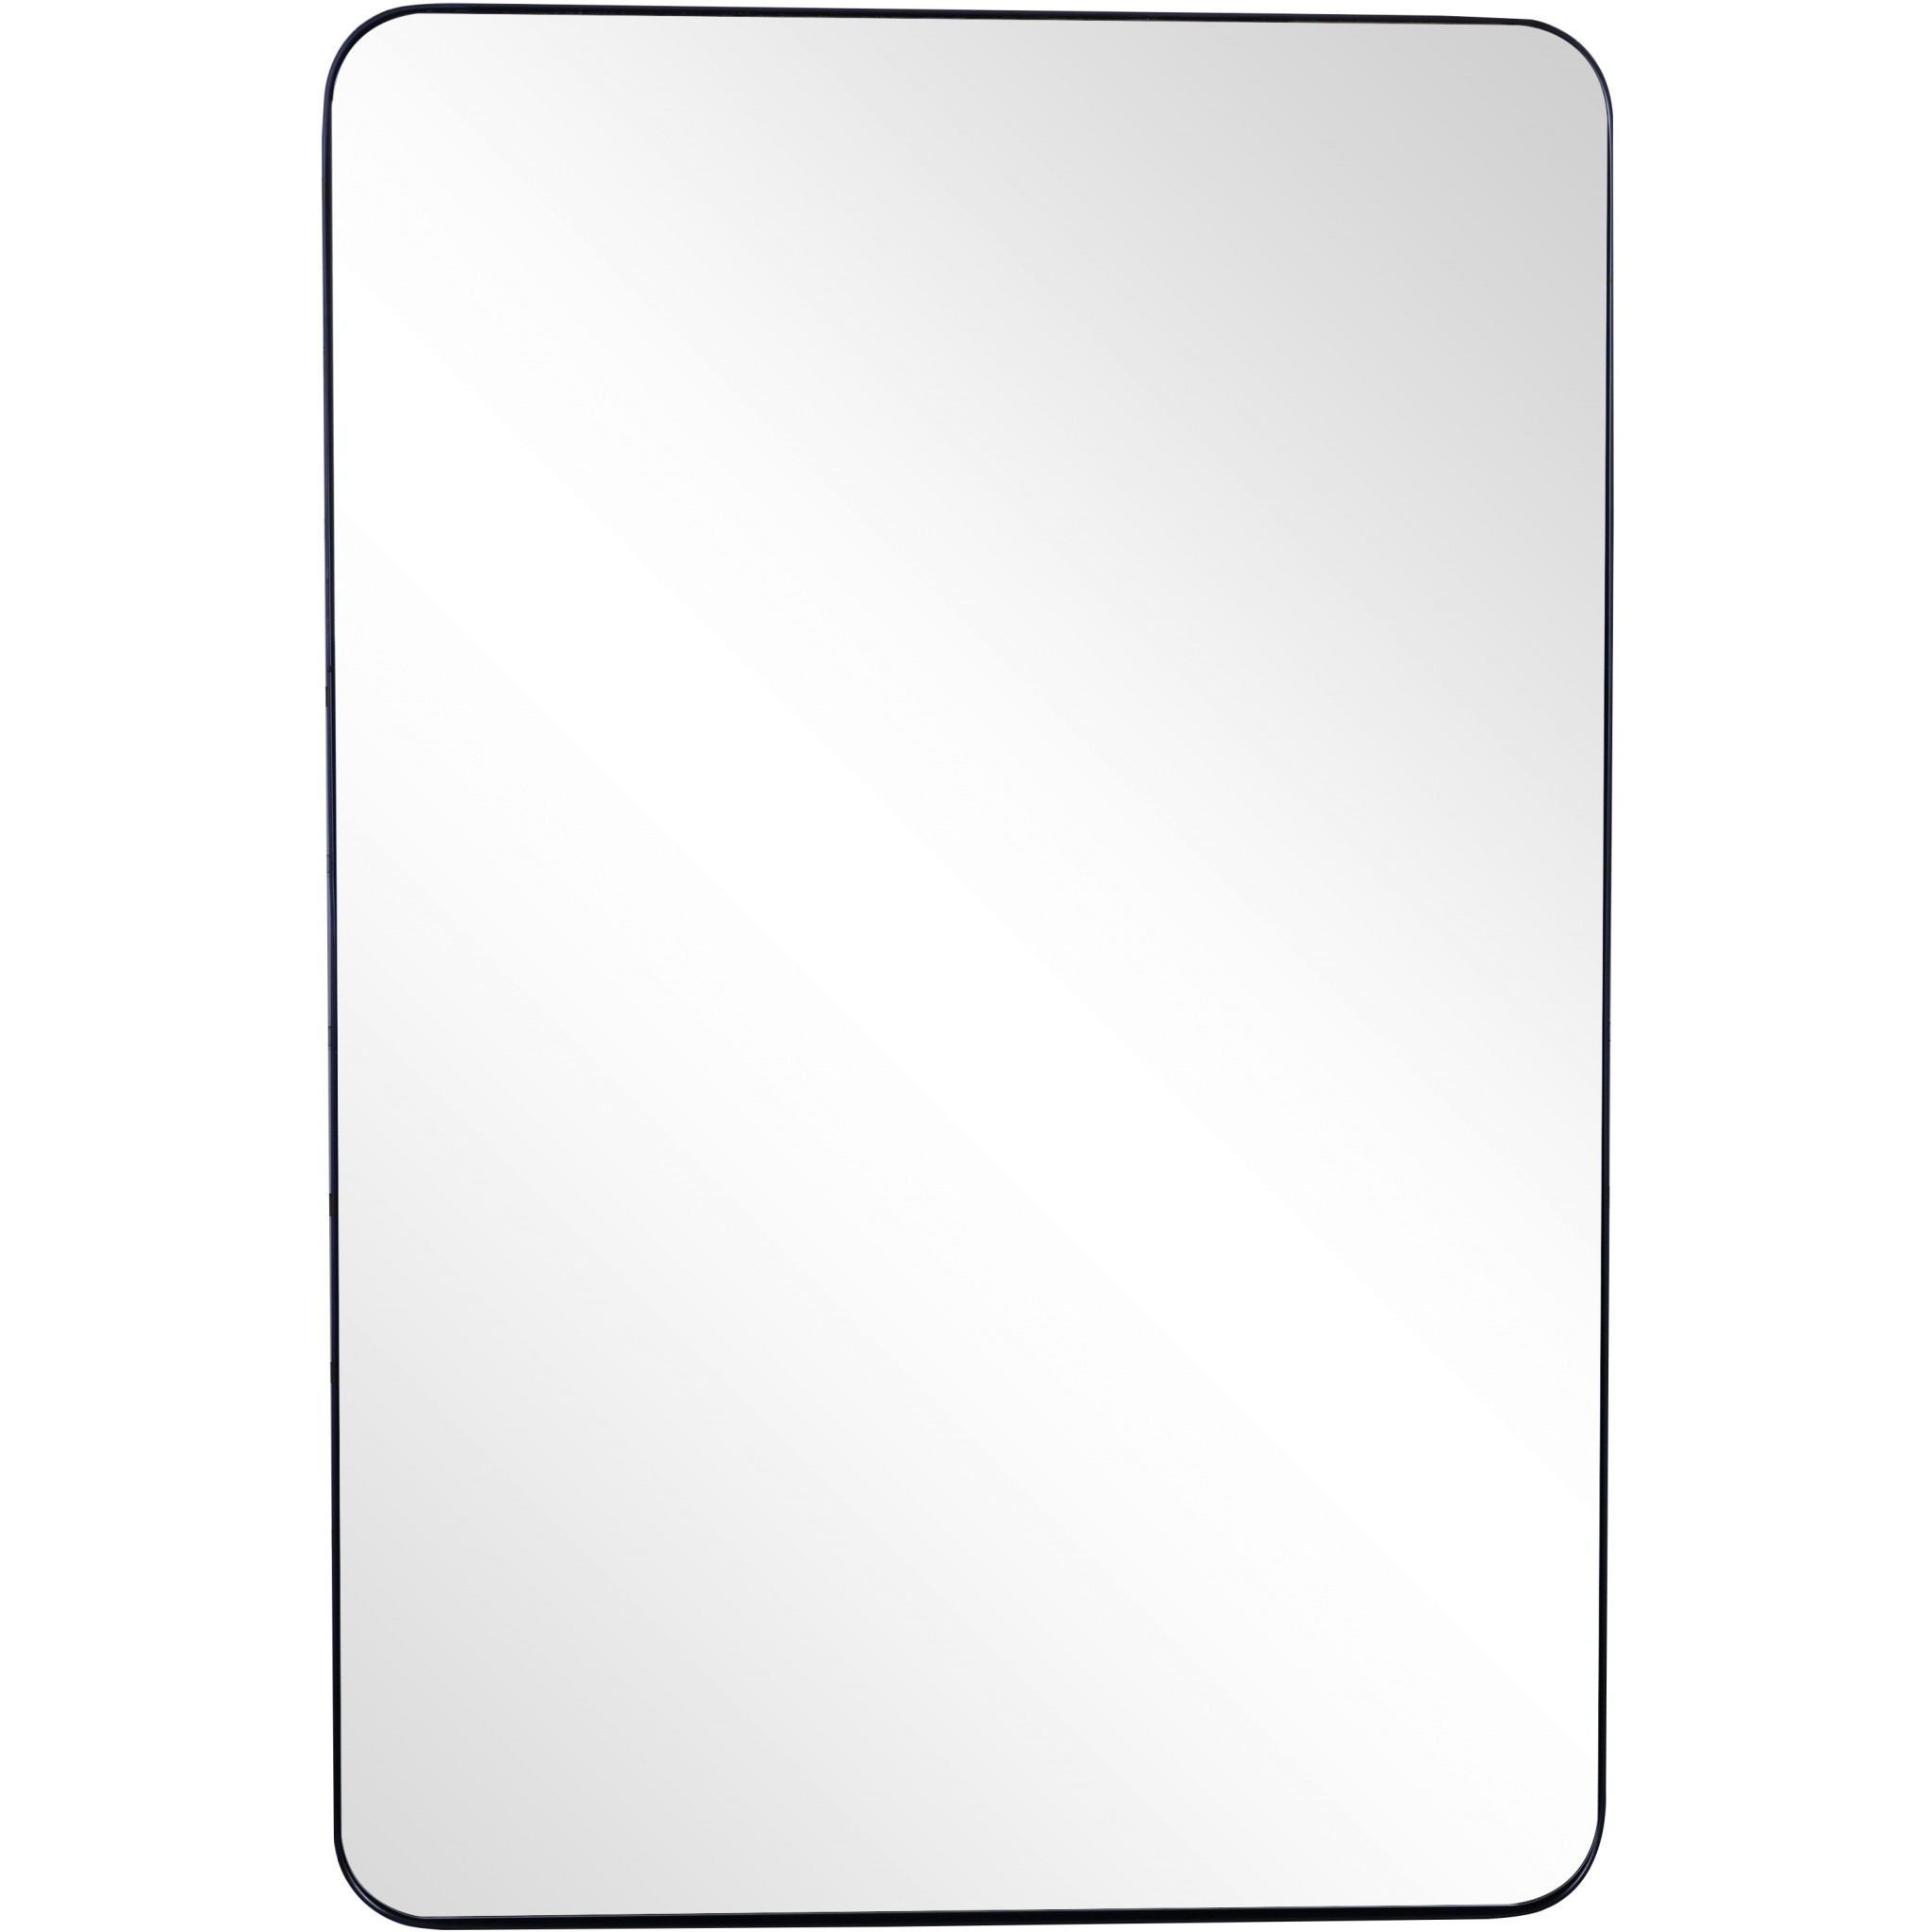 Rectangular Clean Metal Mirror